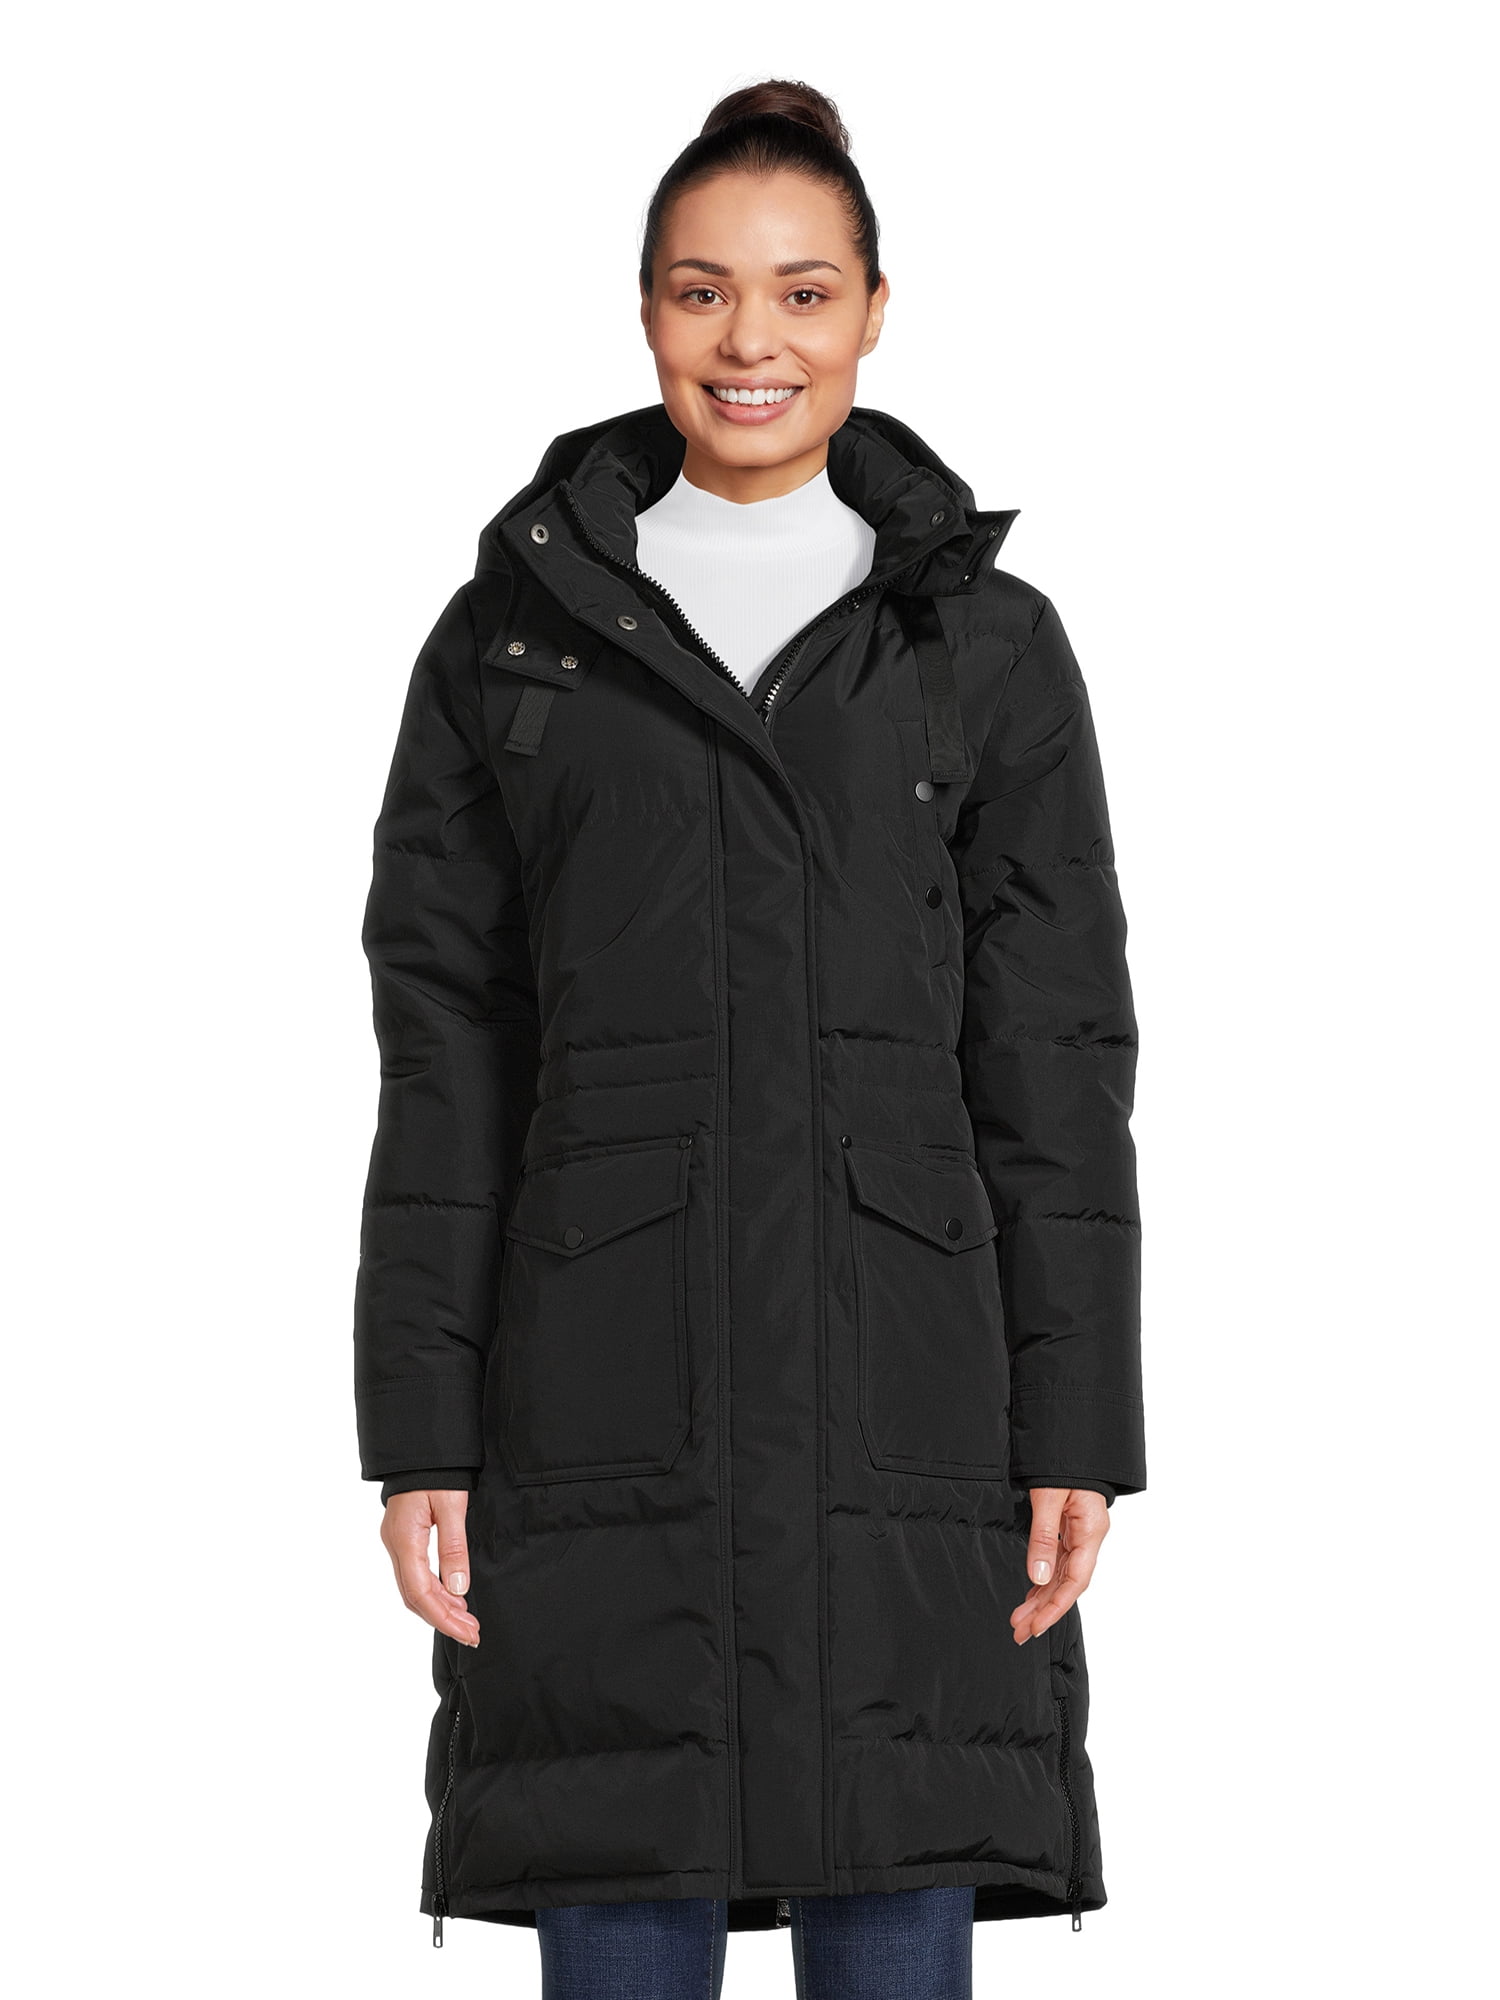 Swiss Tech Women's Ultra Long Parka Jacket, Sizes XS-3X - Walmart.com